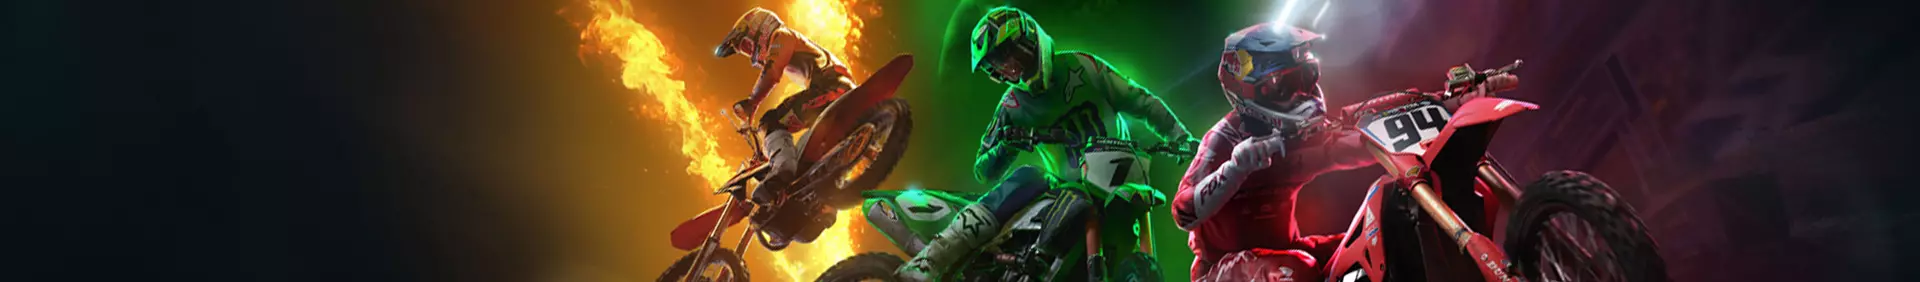 Monster Energy Supercross: el Videojuego Oficial 5